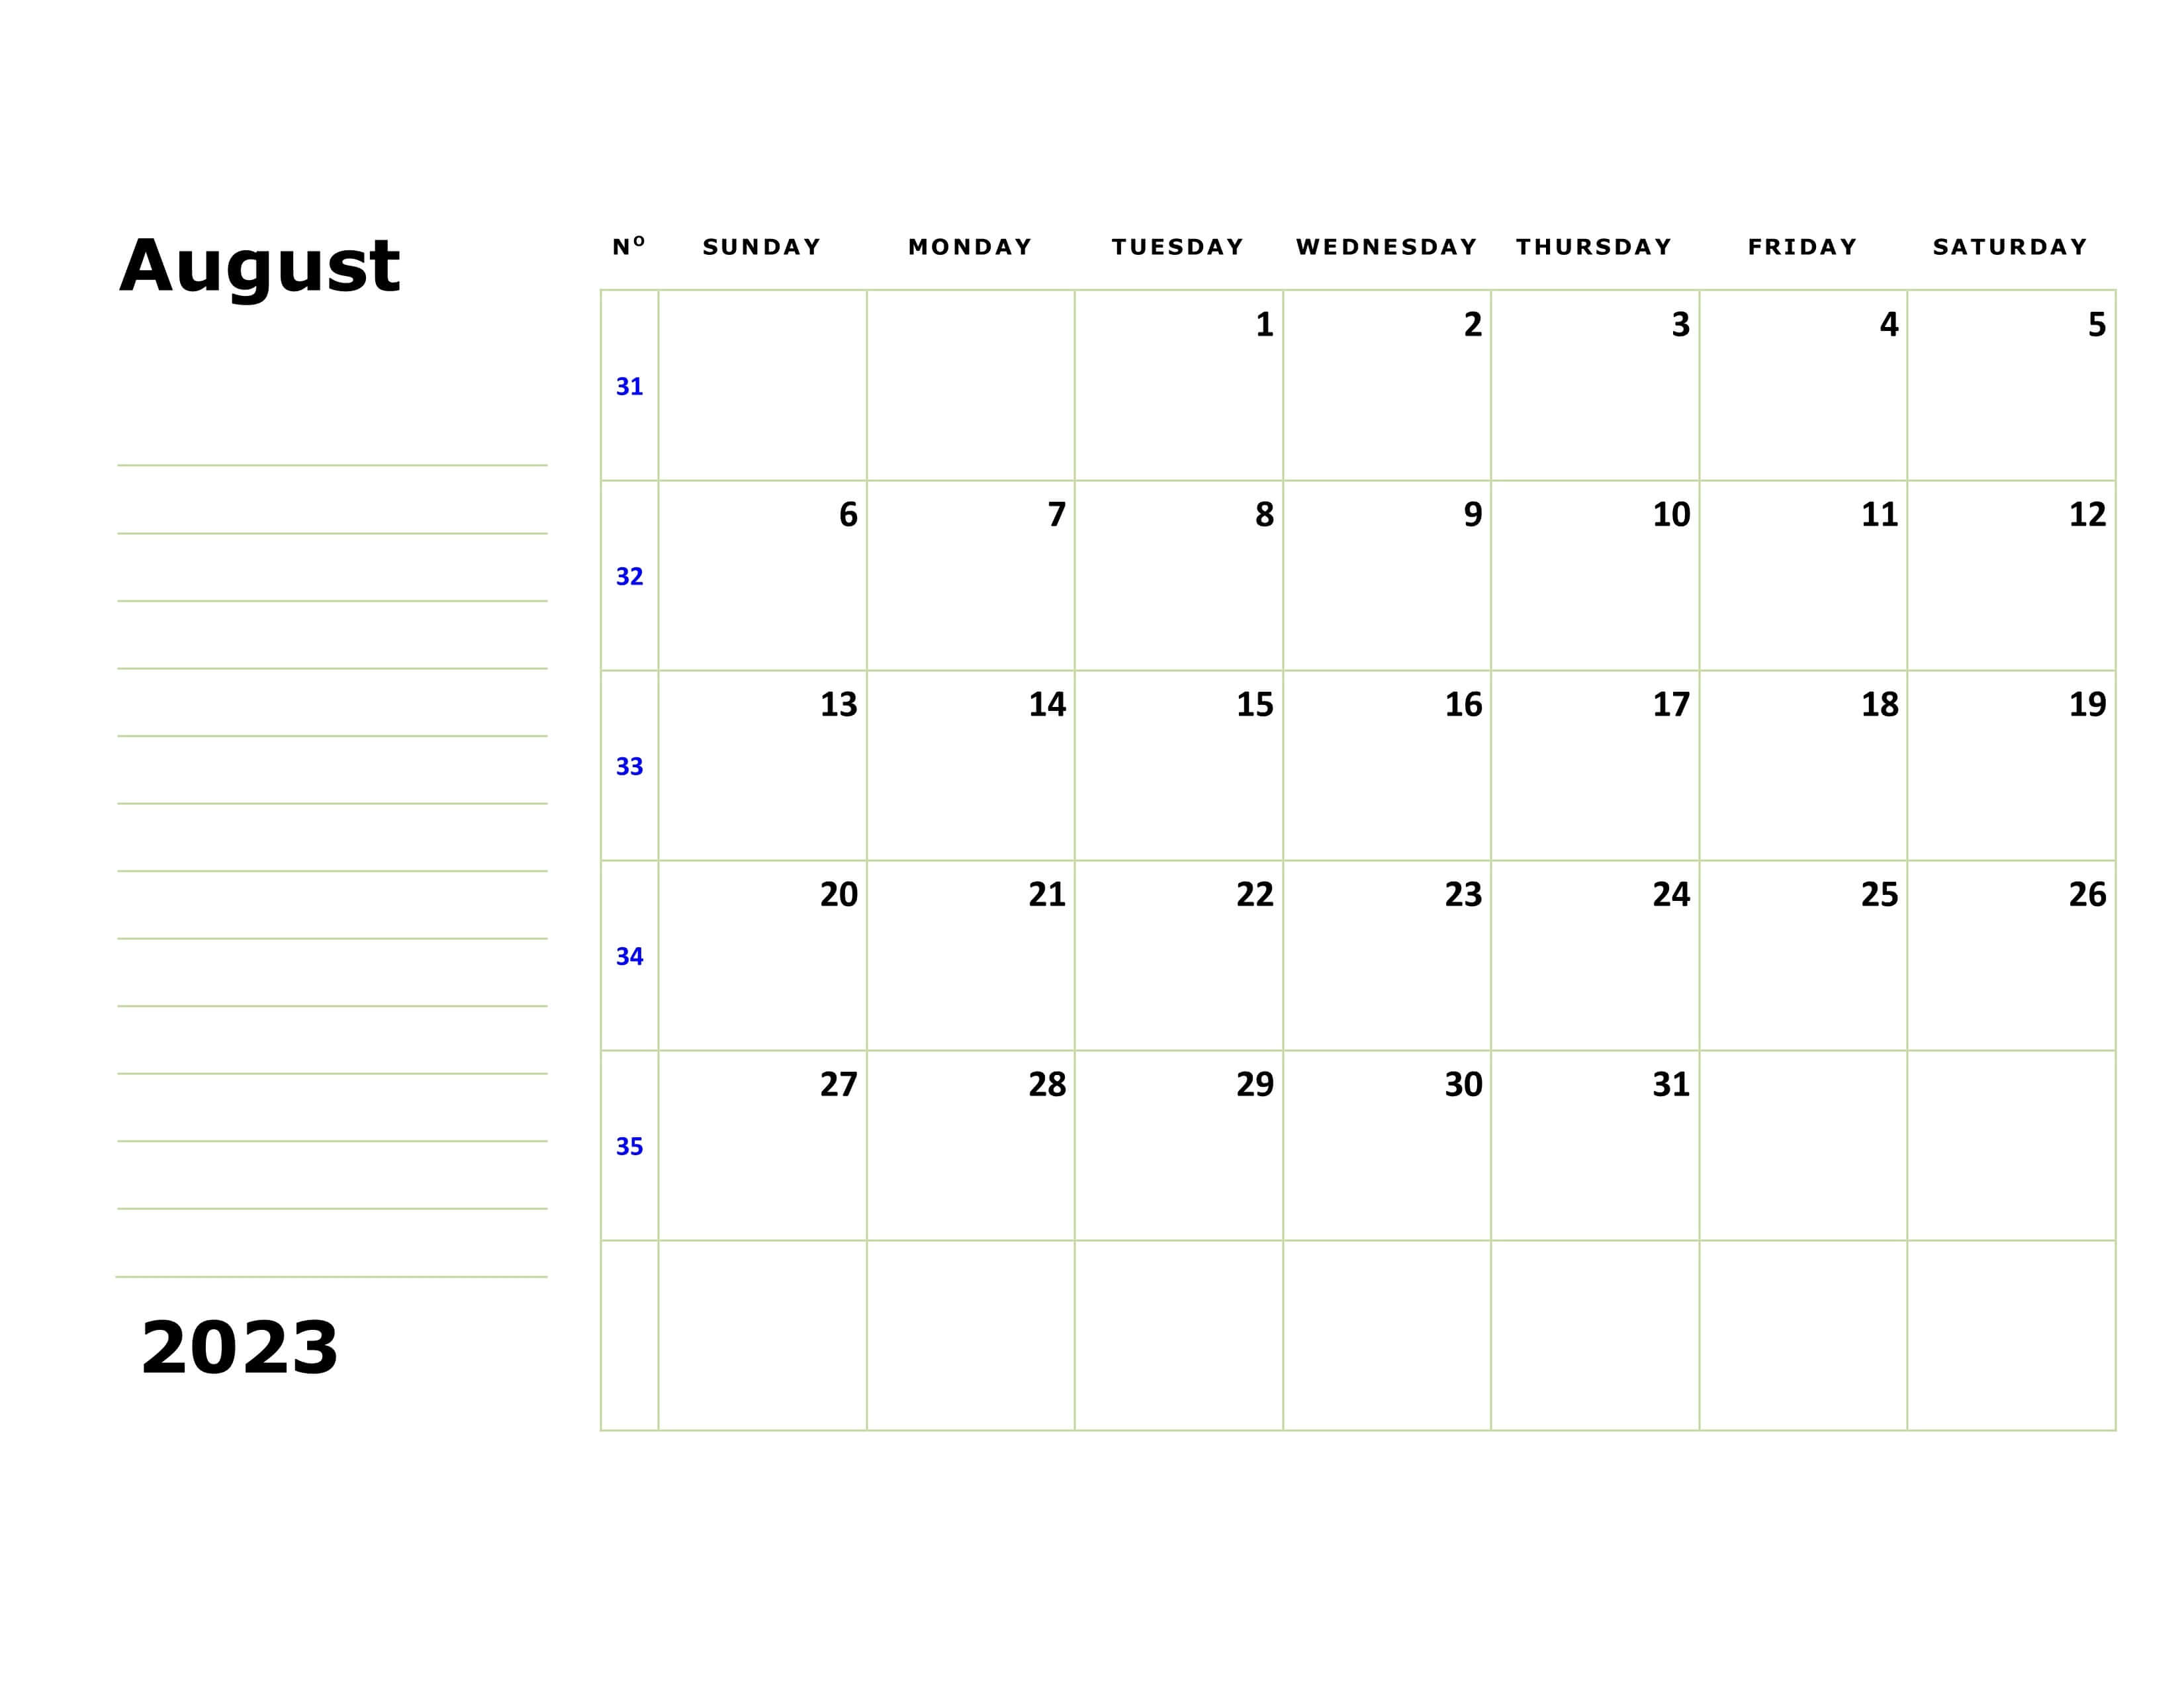 August 2023 Holidays Calendar